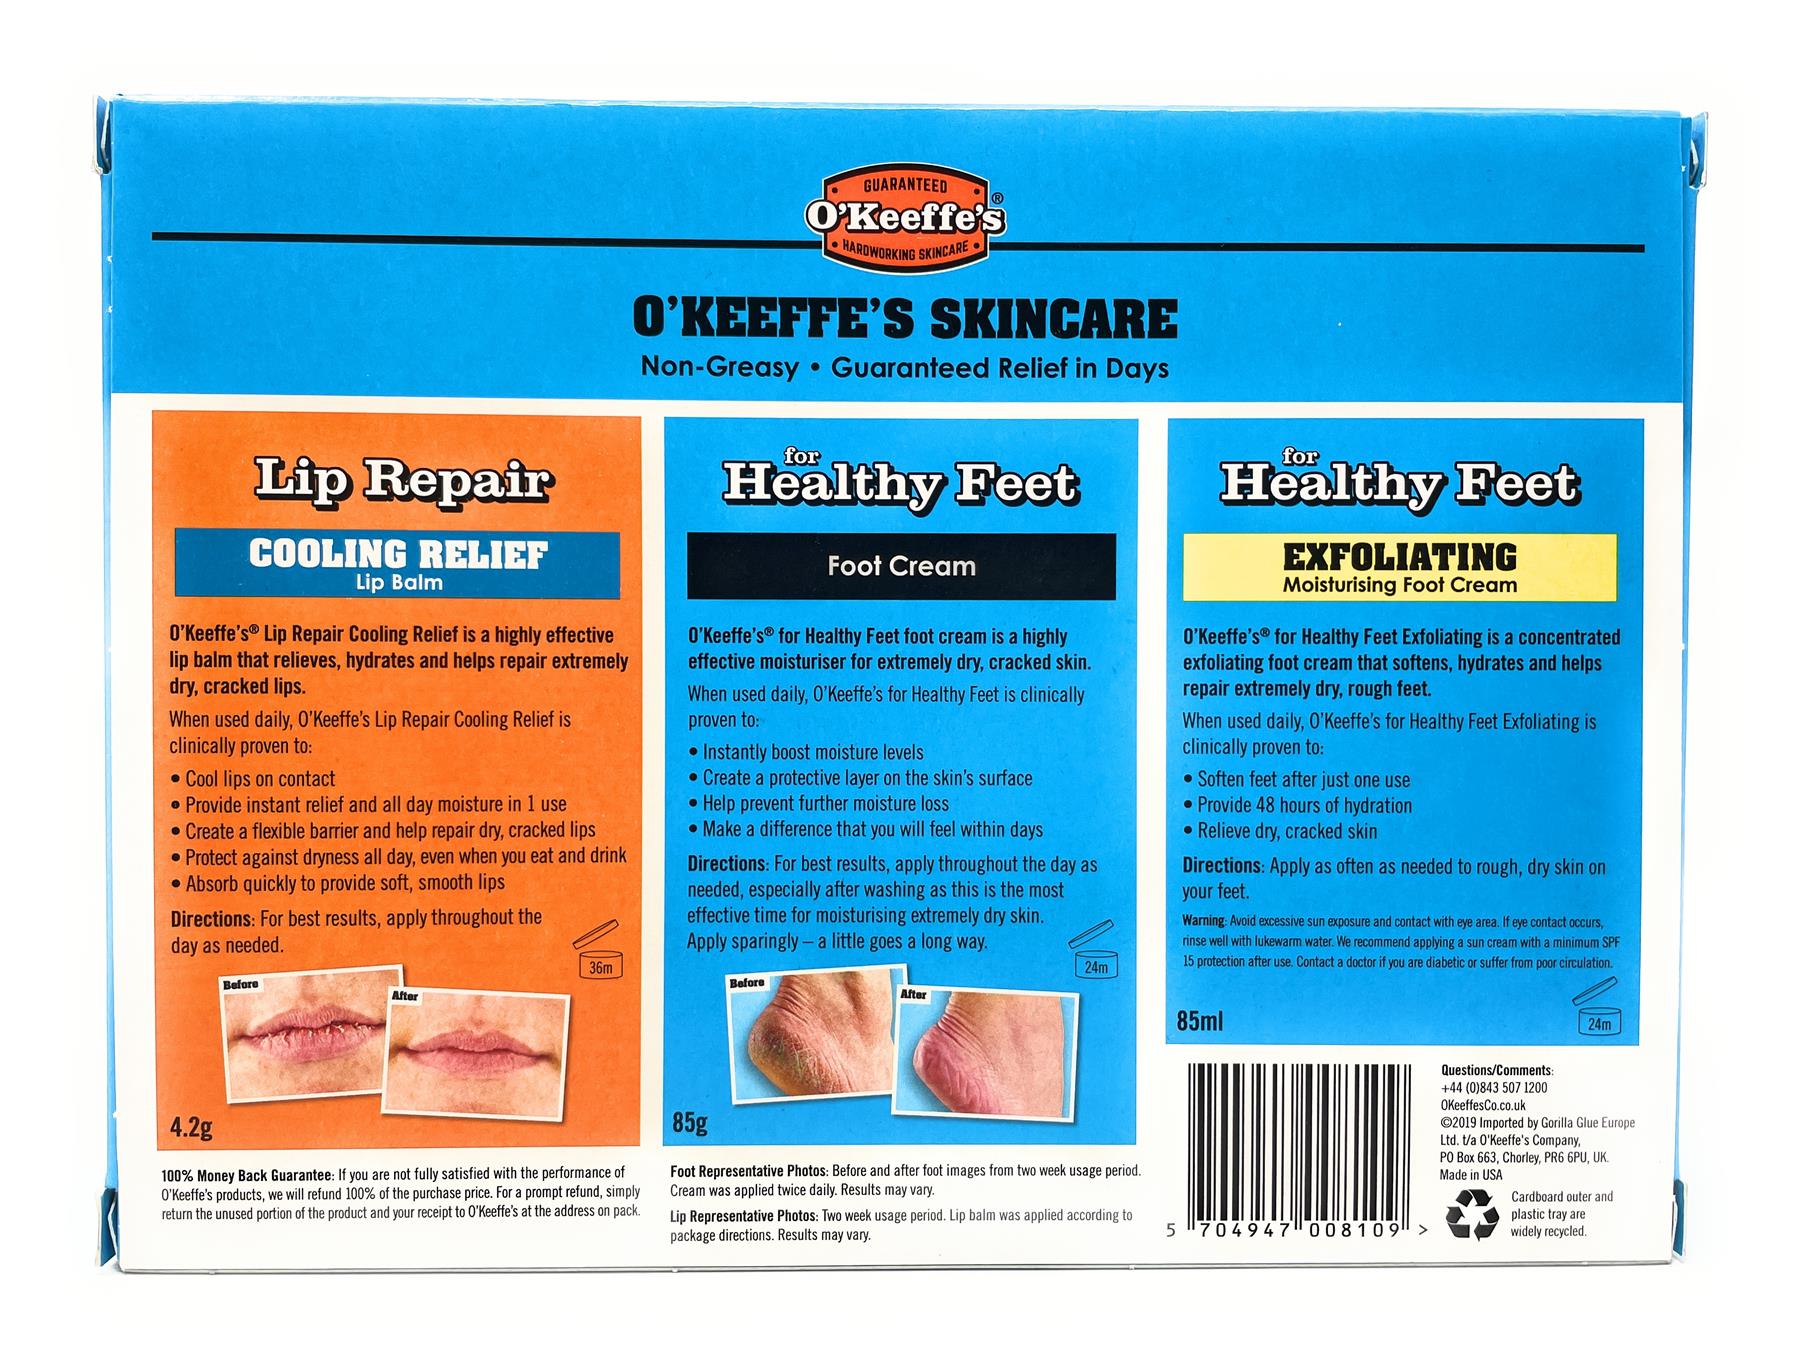 Introducing Healthy Feet Exfoliating! - O'Keeffe's UK